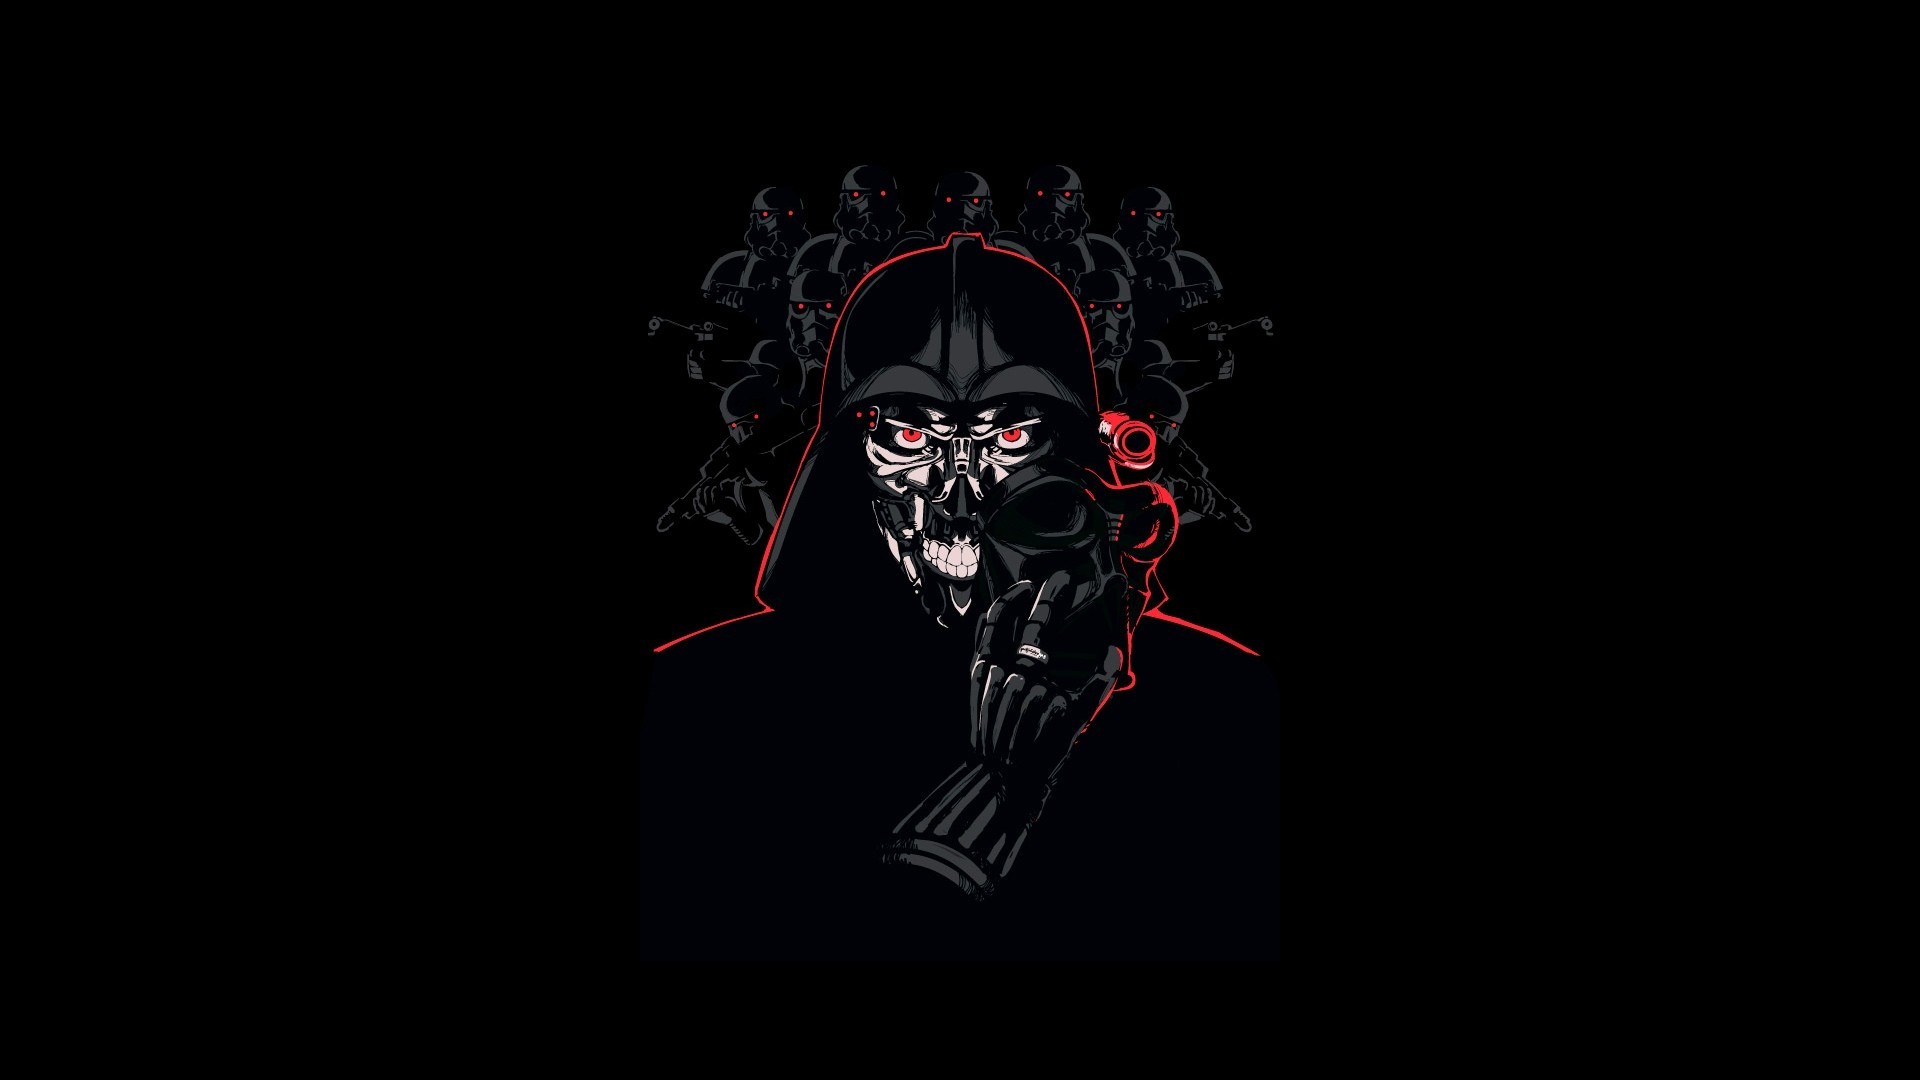 General 1920x1080 Star Wars Darth Vader Sith minimalism artwork Star Wars Villains villains science fiction